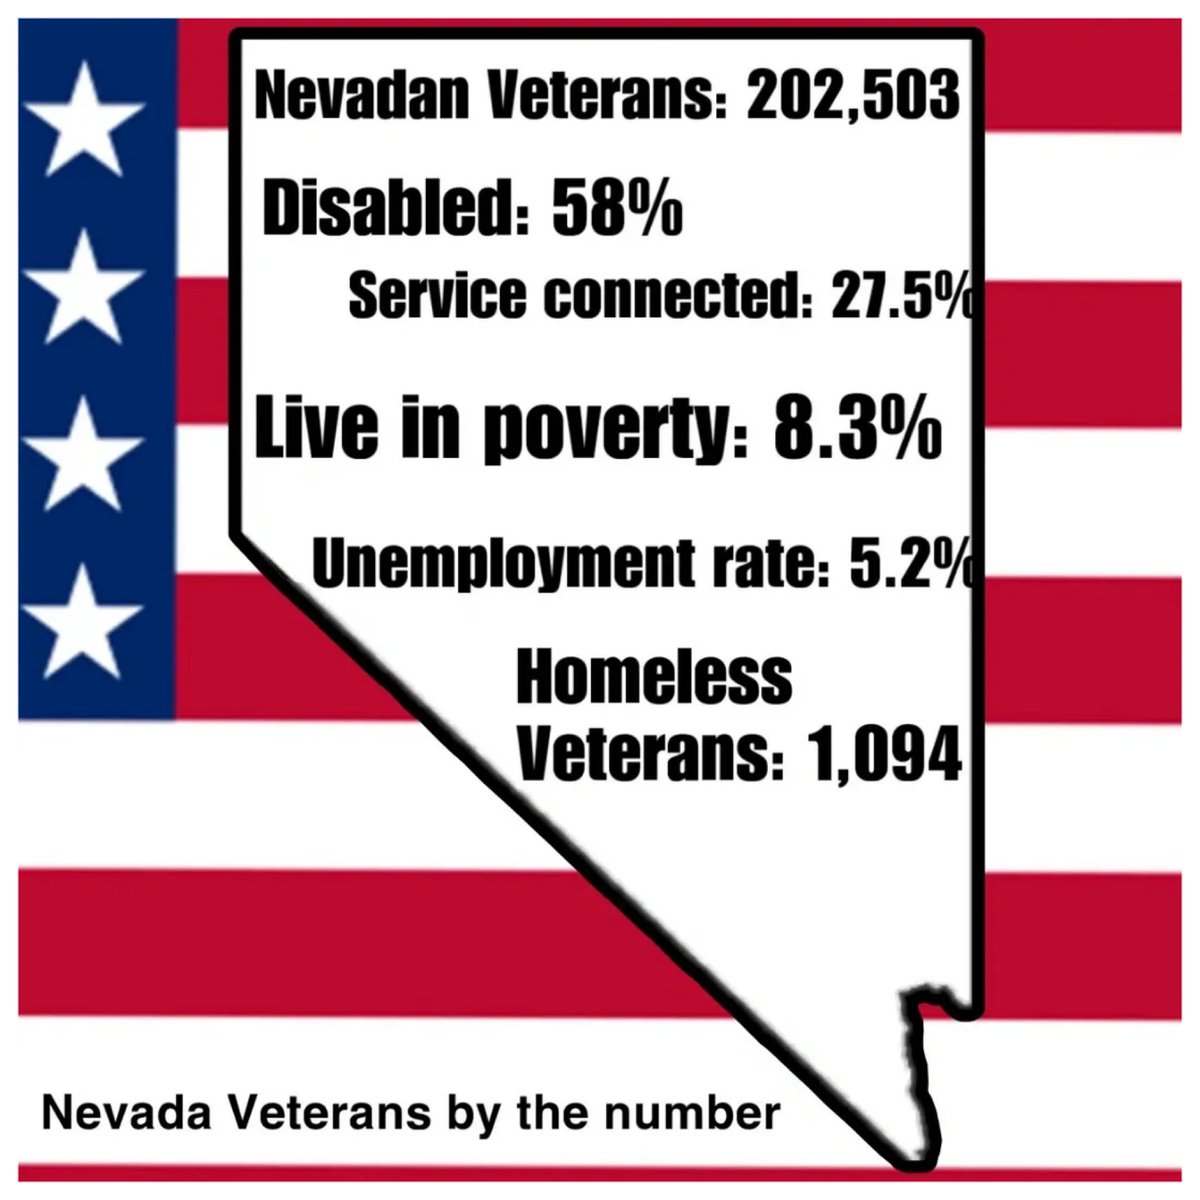 Nevada ranks 7th-highest for its Veteran population
 #americanhopefoundation #veterannonprofit #veteranowned #disabledveteran #Veteran #military #veterans #americanhope #nevada #northernnevadaveterans #nevadaveterans